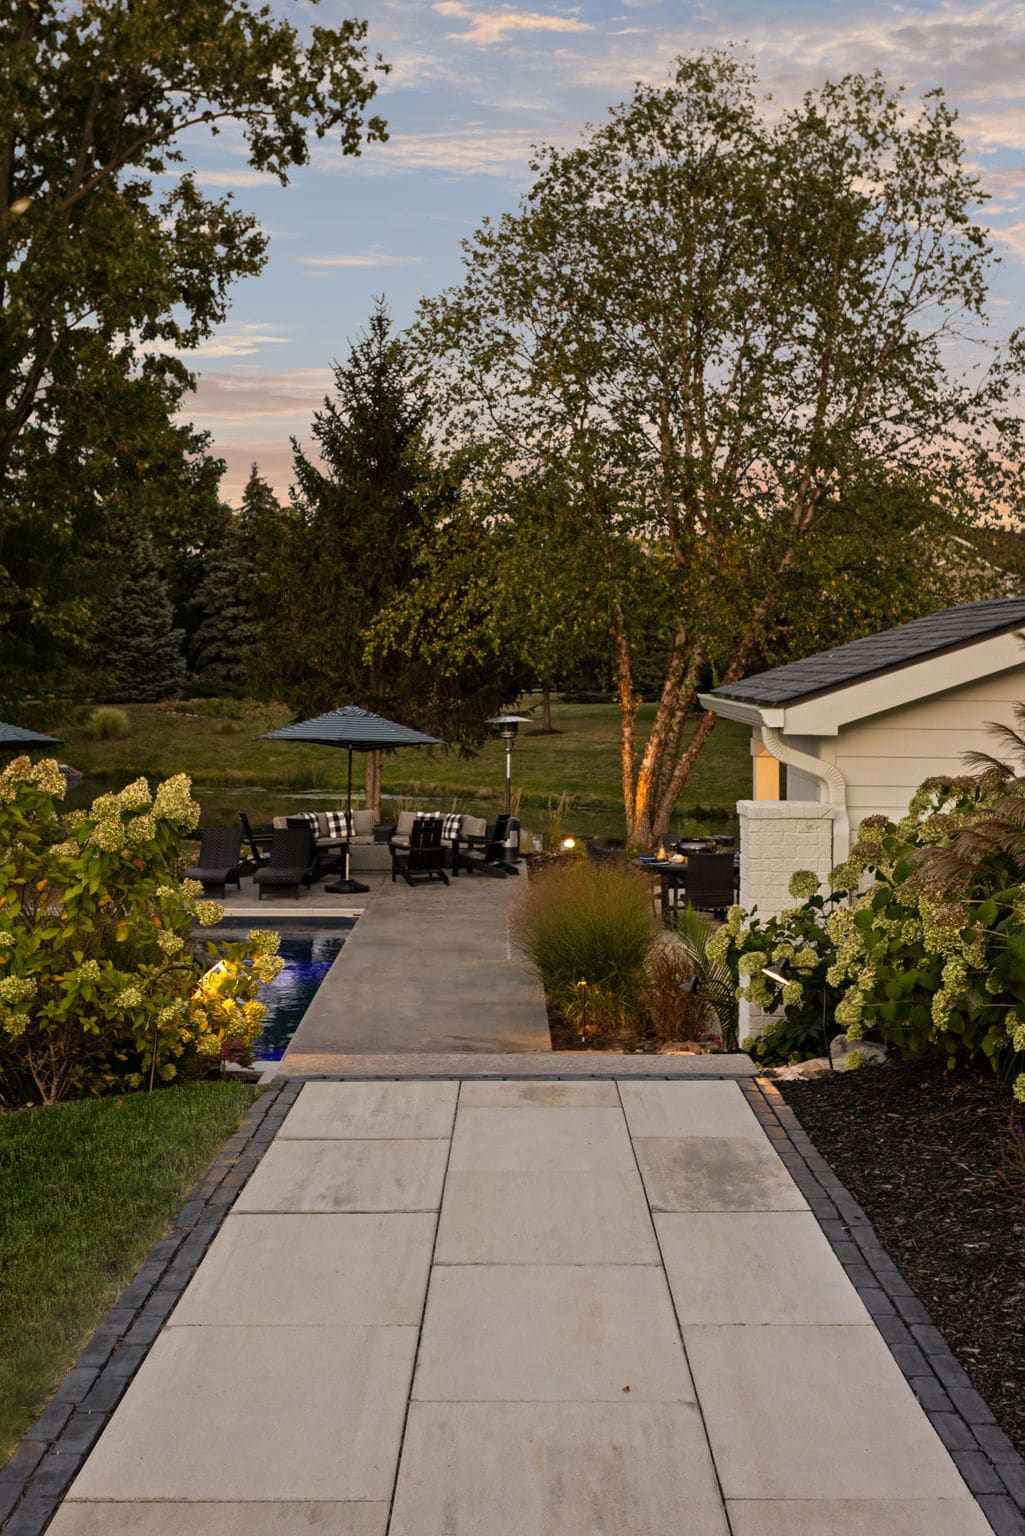 Paver pathway through an elegant backyard garden.